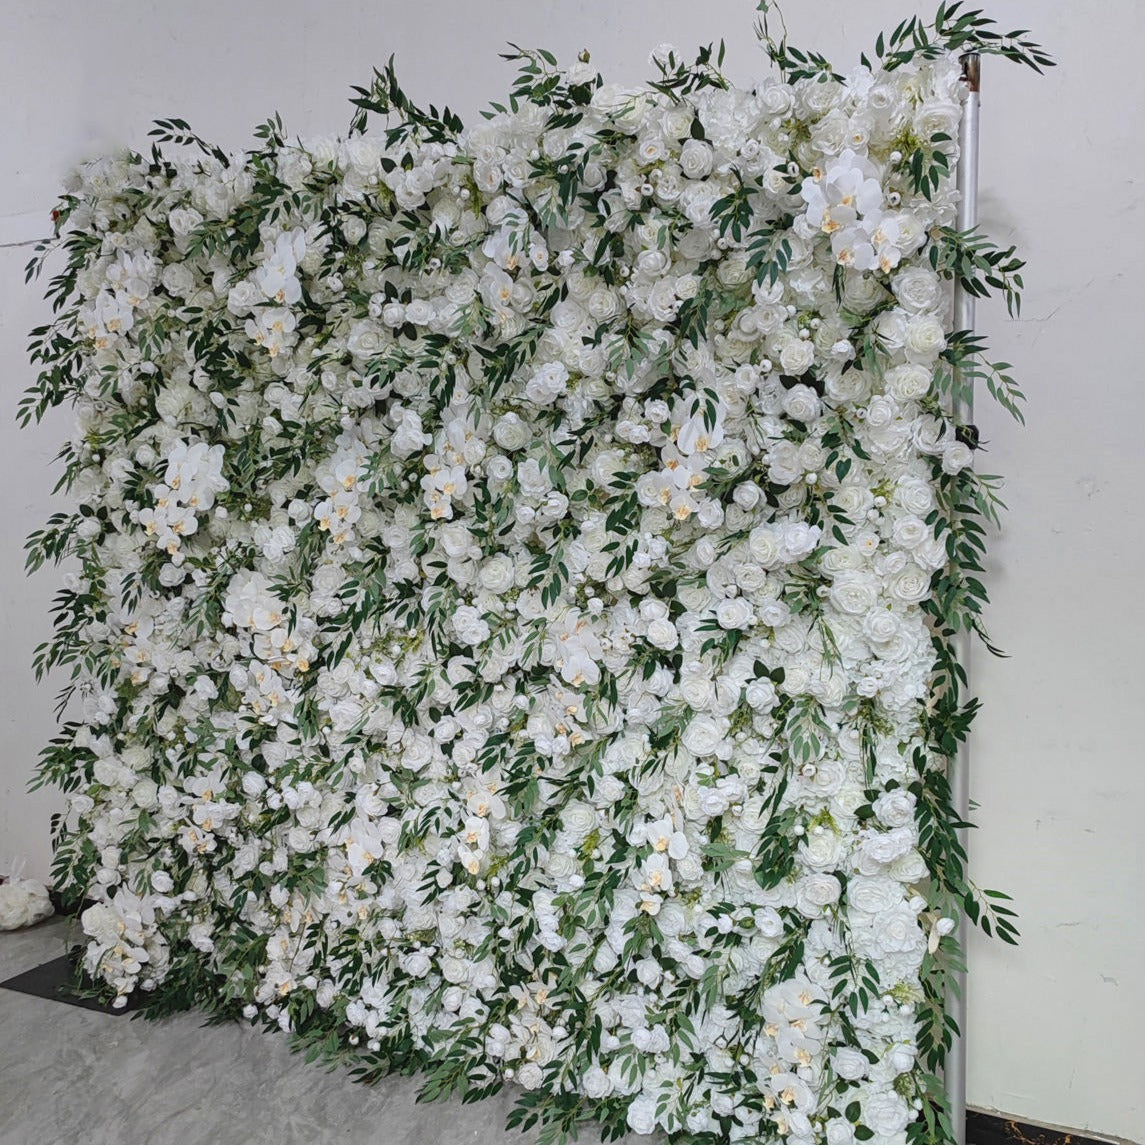 3D Artificial Flower Wall Arrangement Wedding Party Birthday Backdrop Decor HQ3734